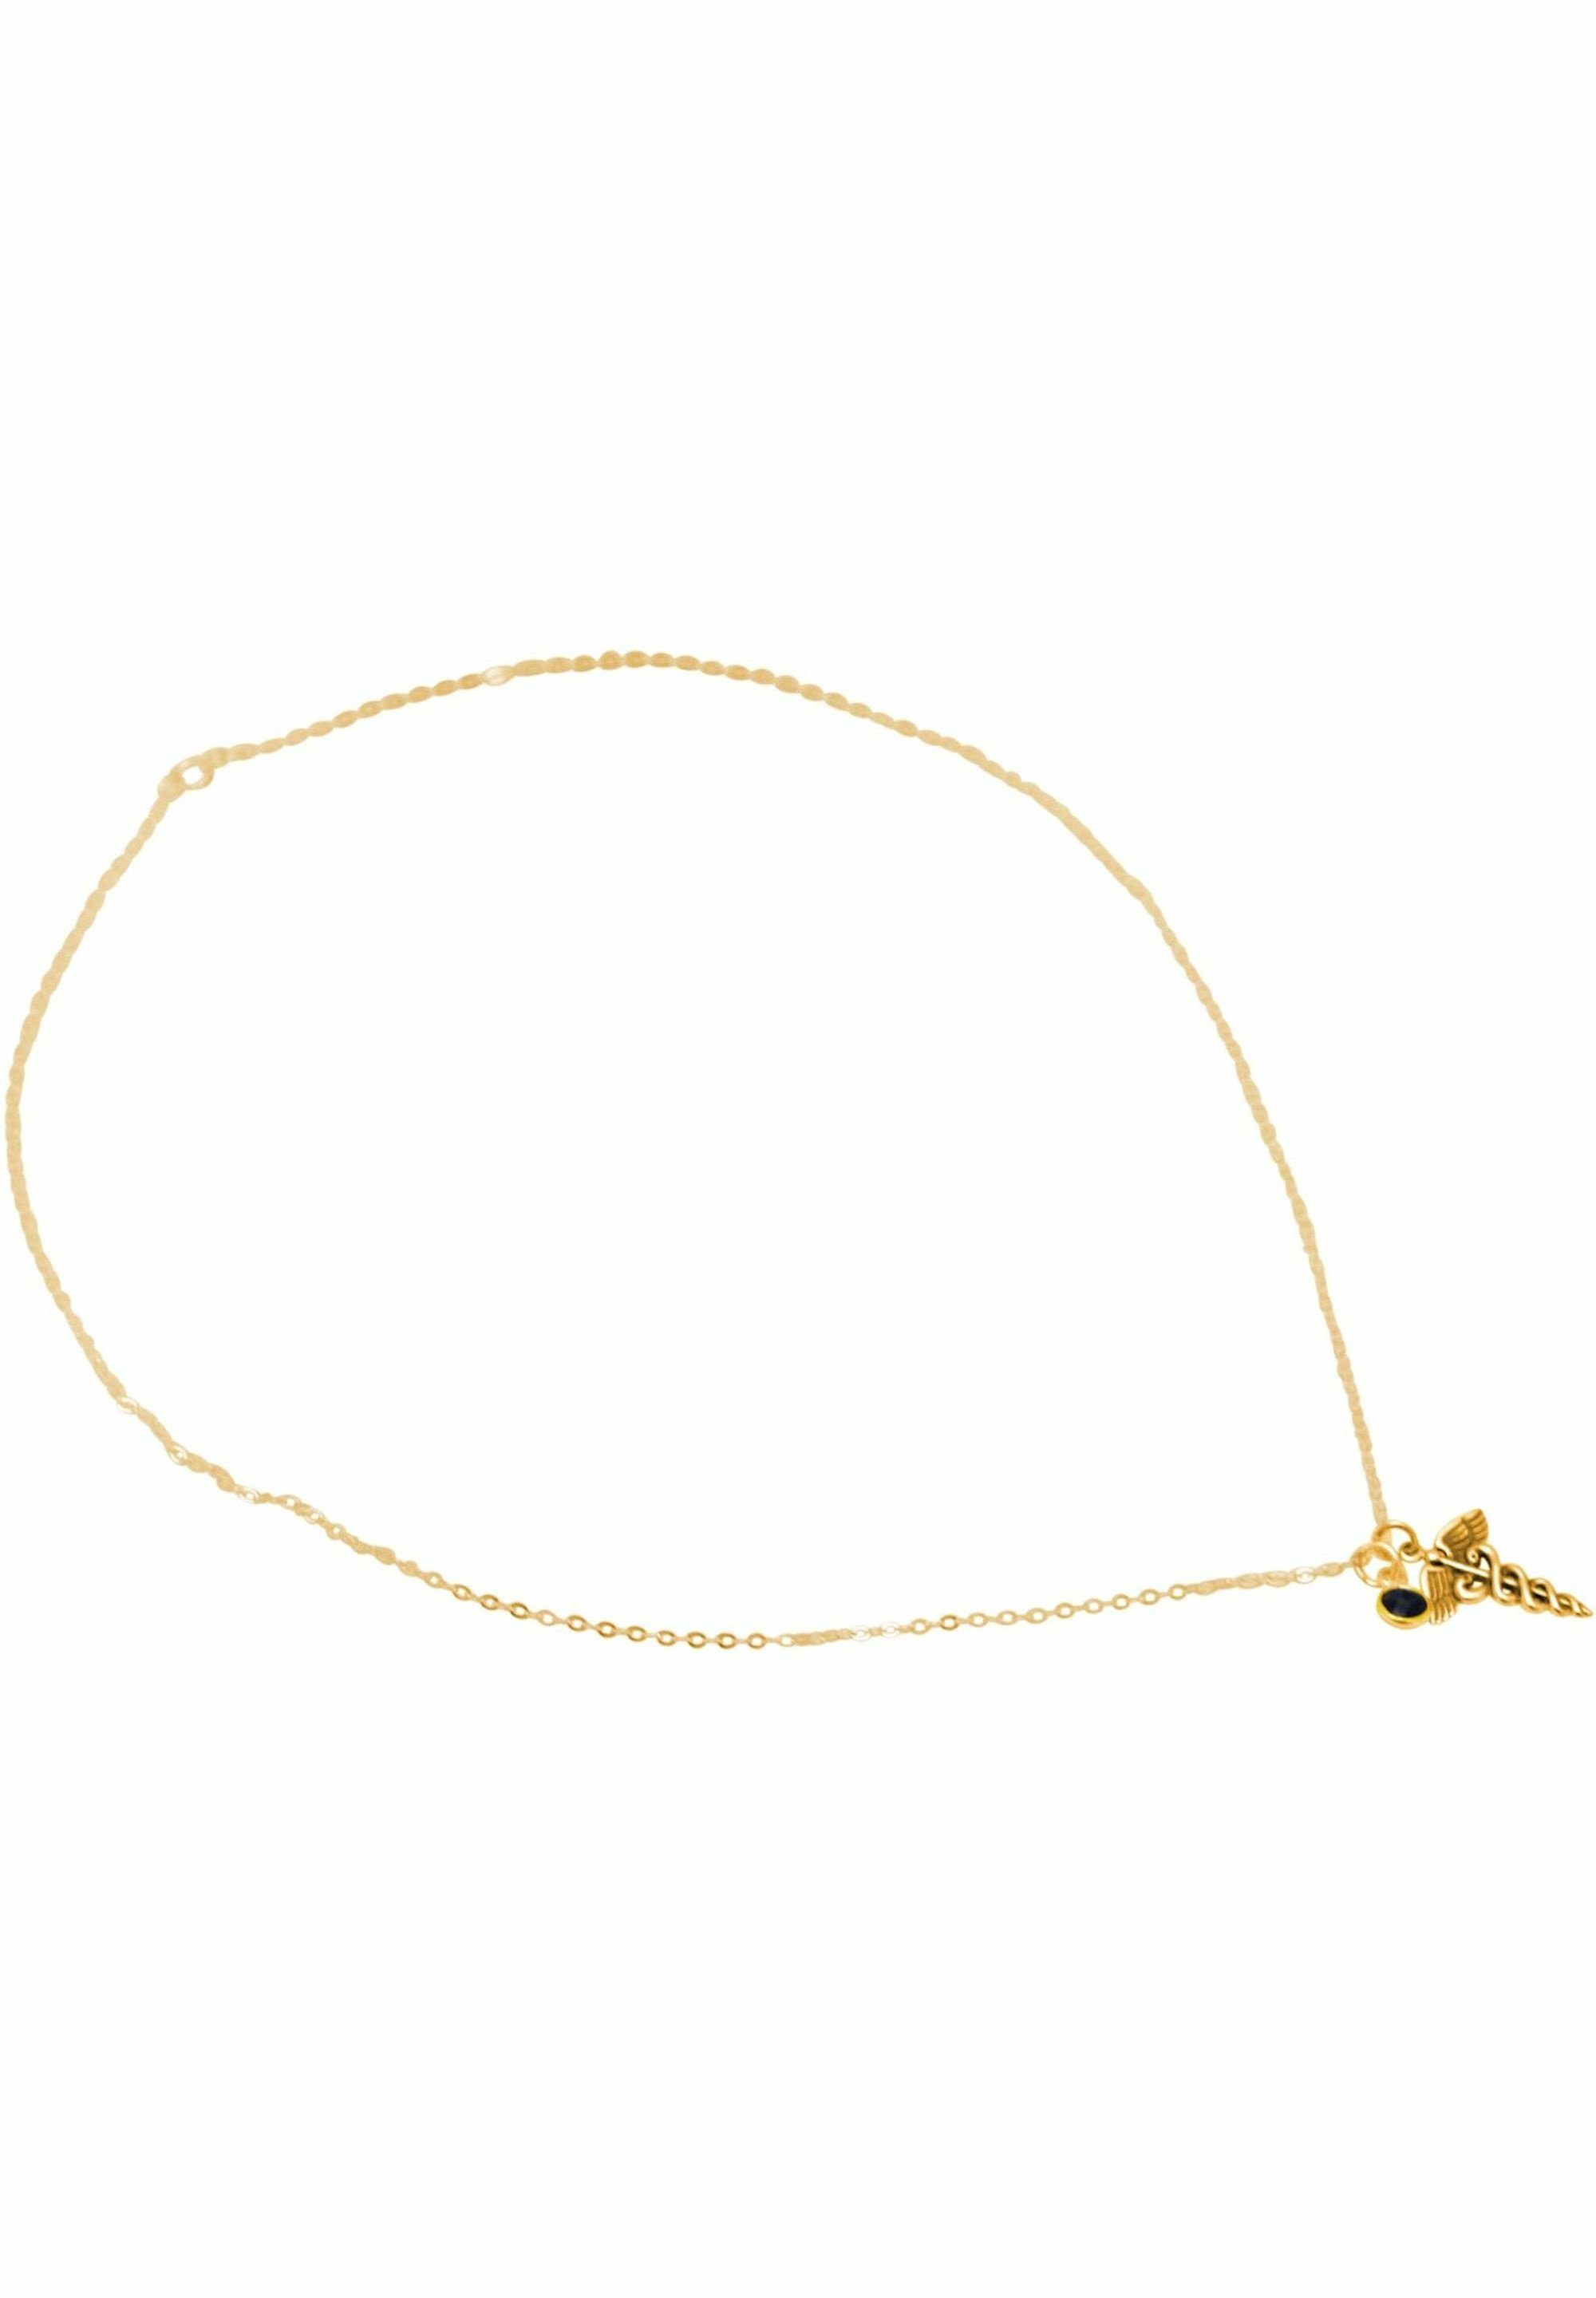 Caduceus Hermesstab, Kette Saphir coloured mit gold Anhänger - Äskulapstab Gemshine